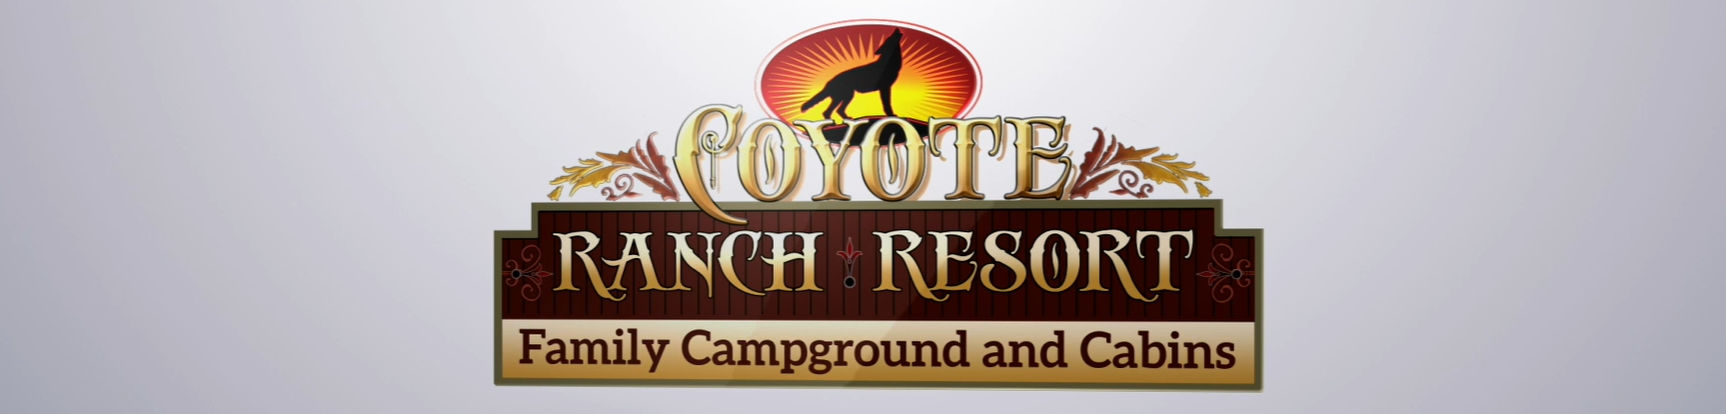 Coyote Ranch Resort Wichita Falls Texas 76310